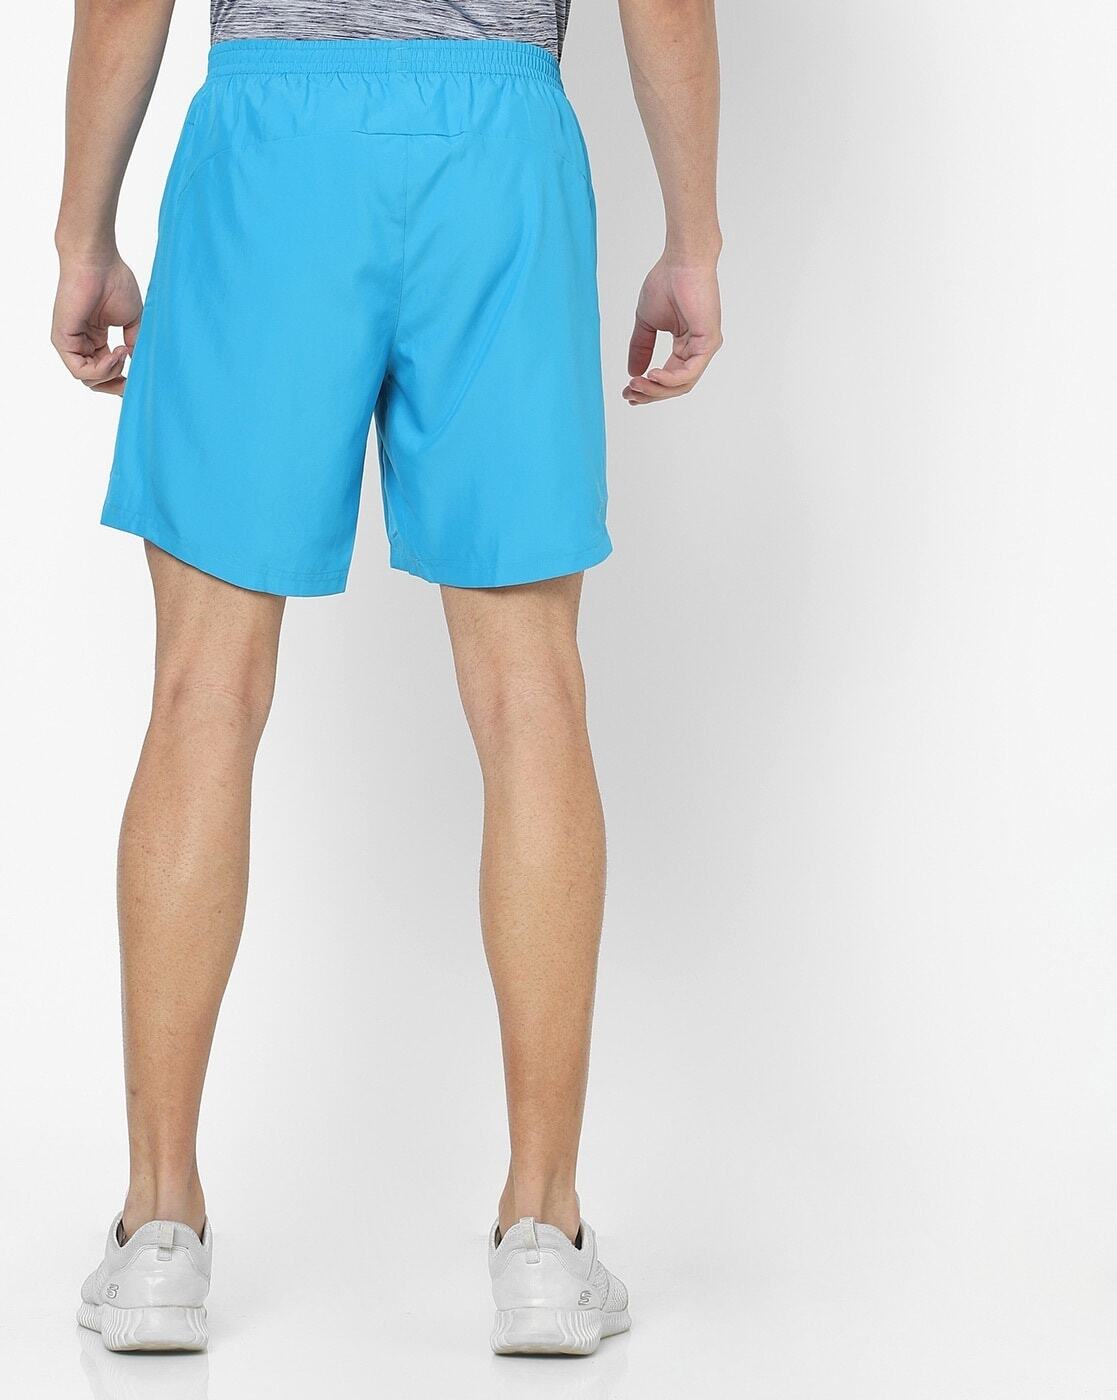 Flat-Front Shorts with Insert Pockets-Ha8570